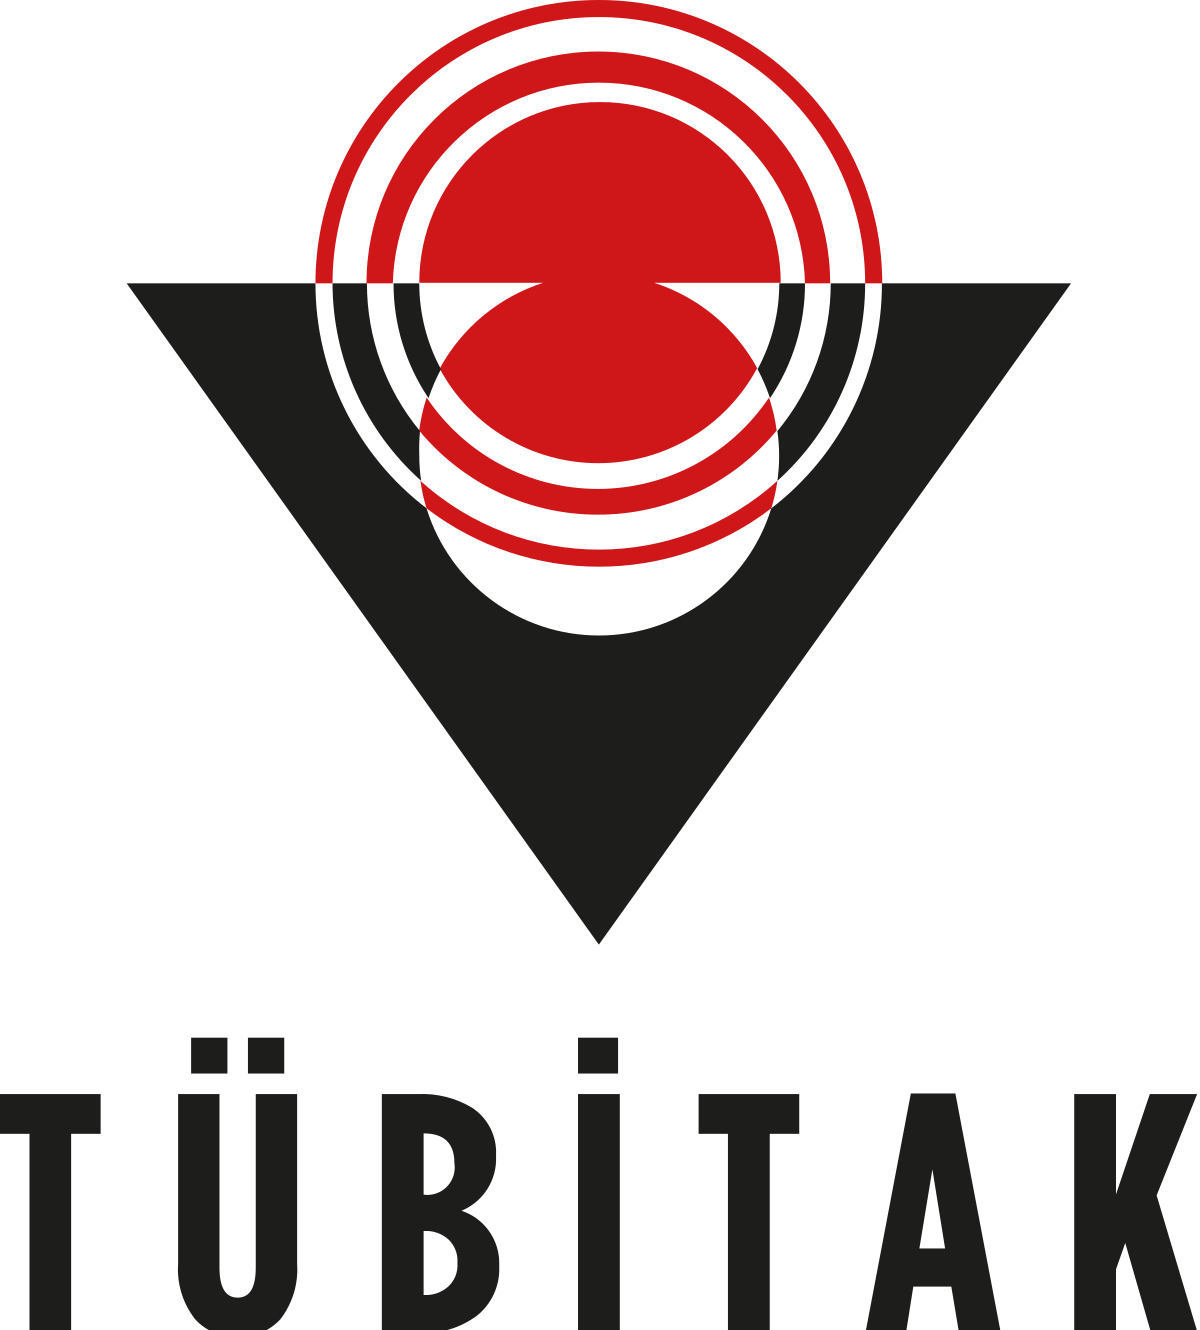 TÜBİTAK_logo.png (88 KB)